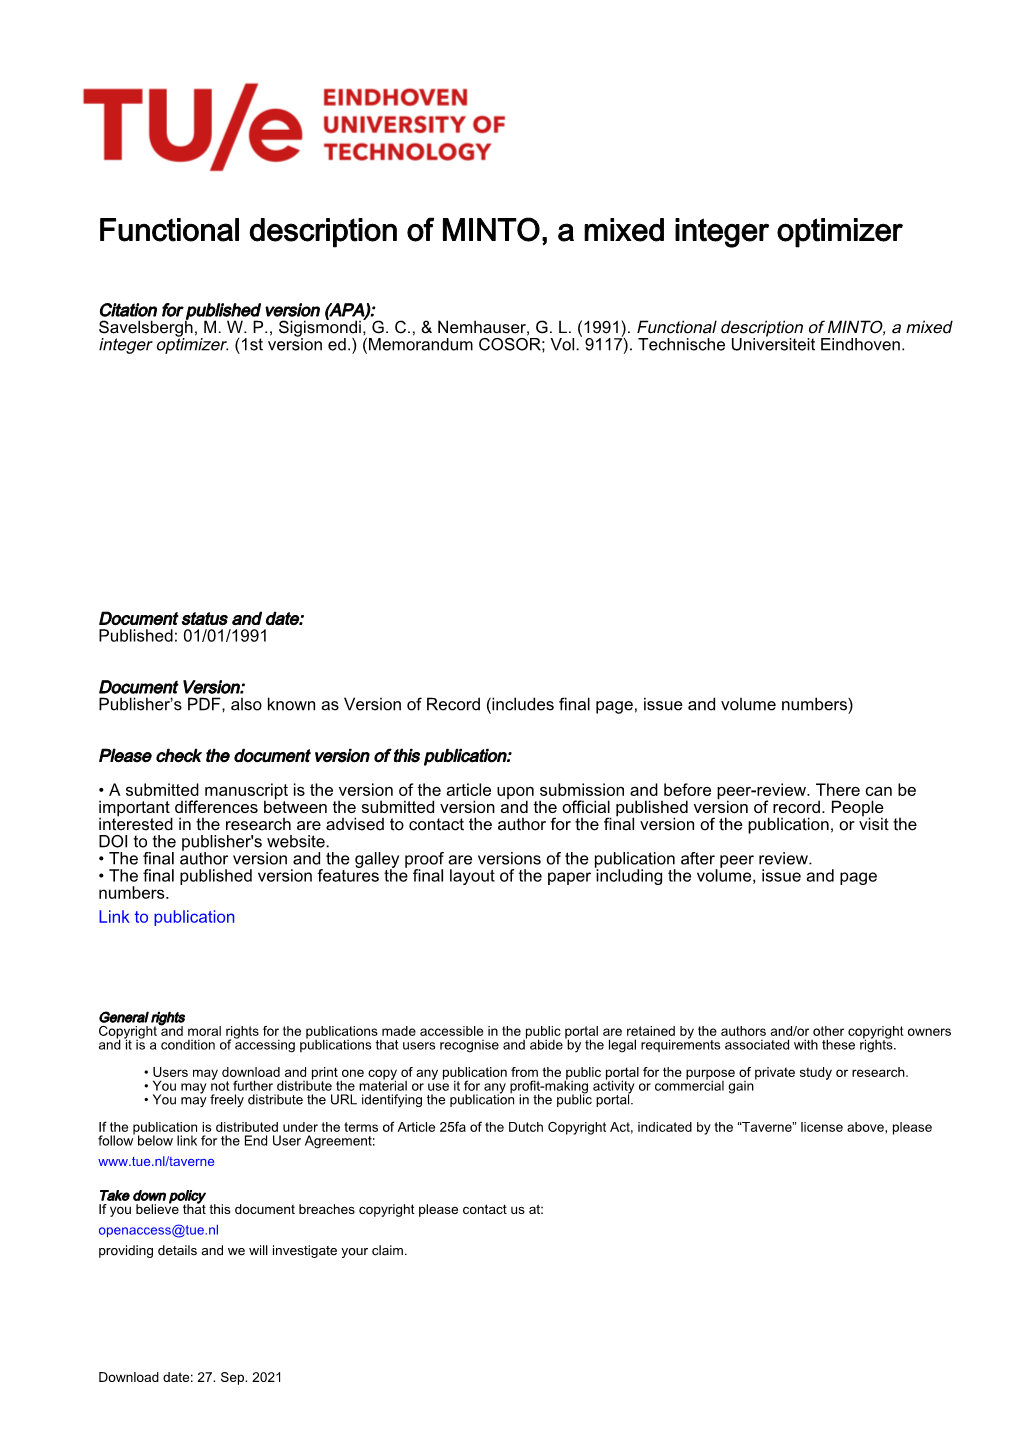 Functional Description of MINTO, a Mixed Integer Optimizer